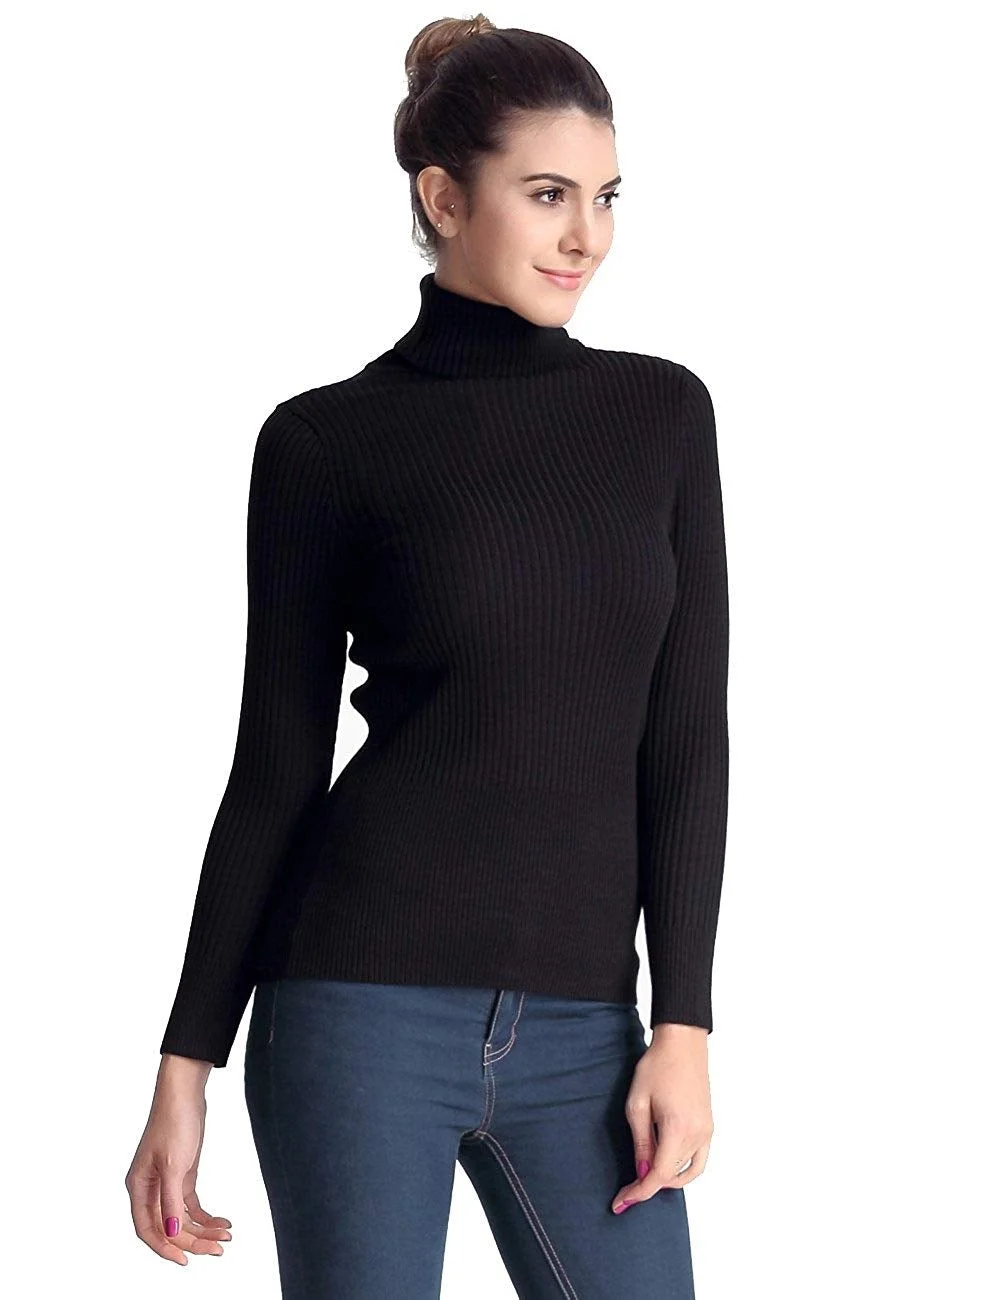 long sleeve sweater Women's Ribbed Turtleneck Long Sleeve Sweater Tops